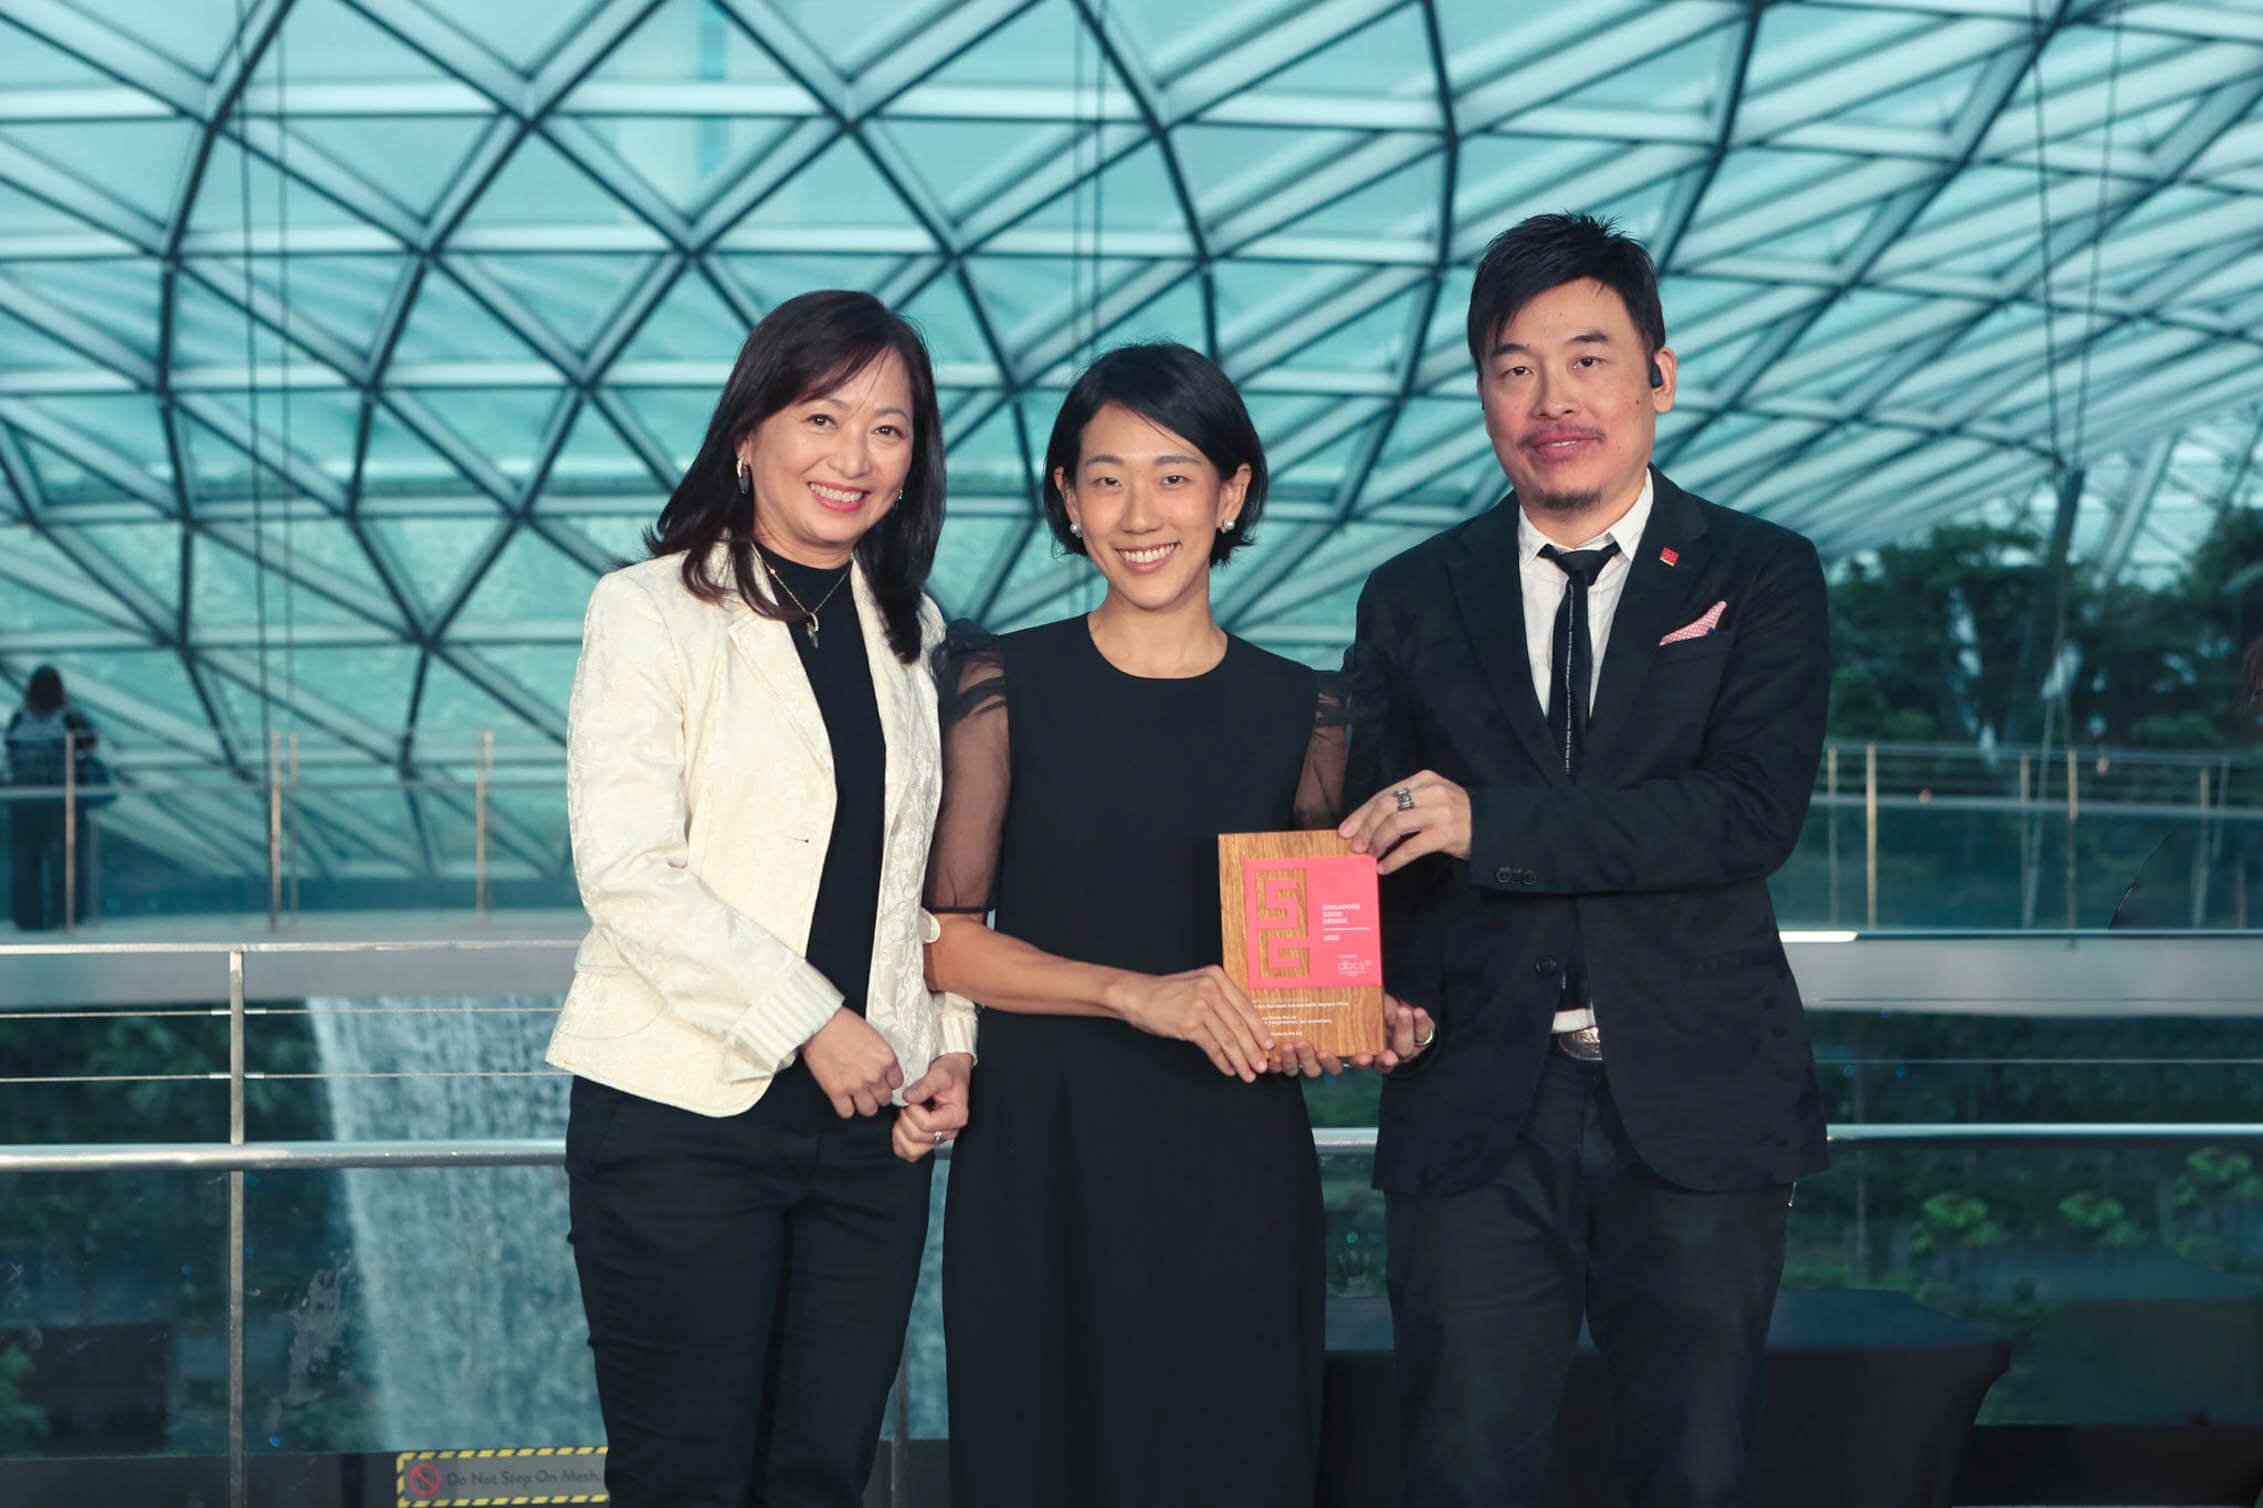  Nu Skin's Cheryl Chua (left) and Conexus Studio’s Nat Jentraichan (right) recieving the award on stage. 